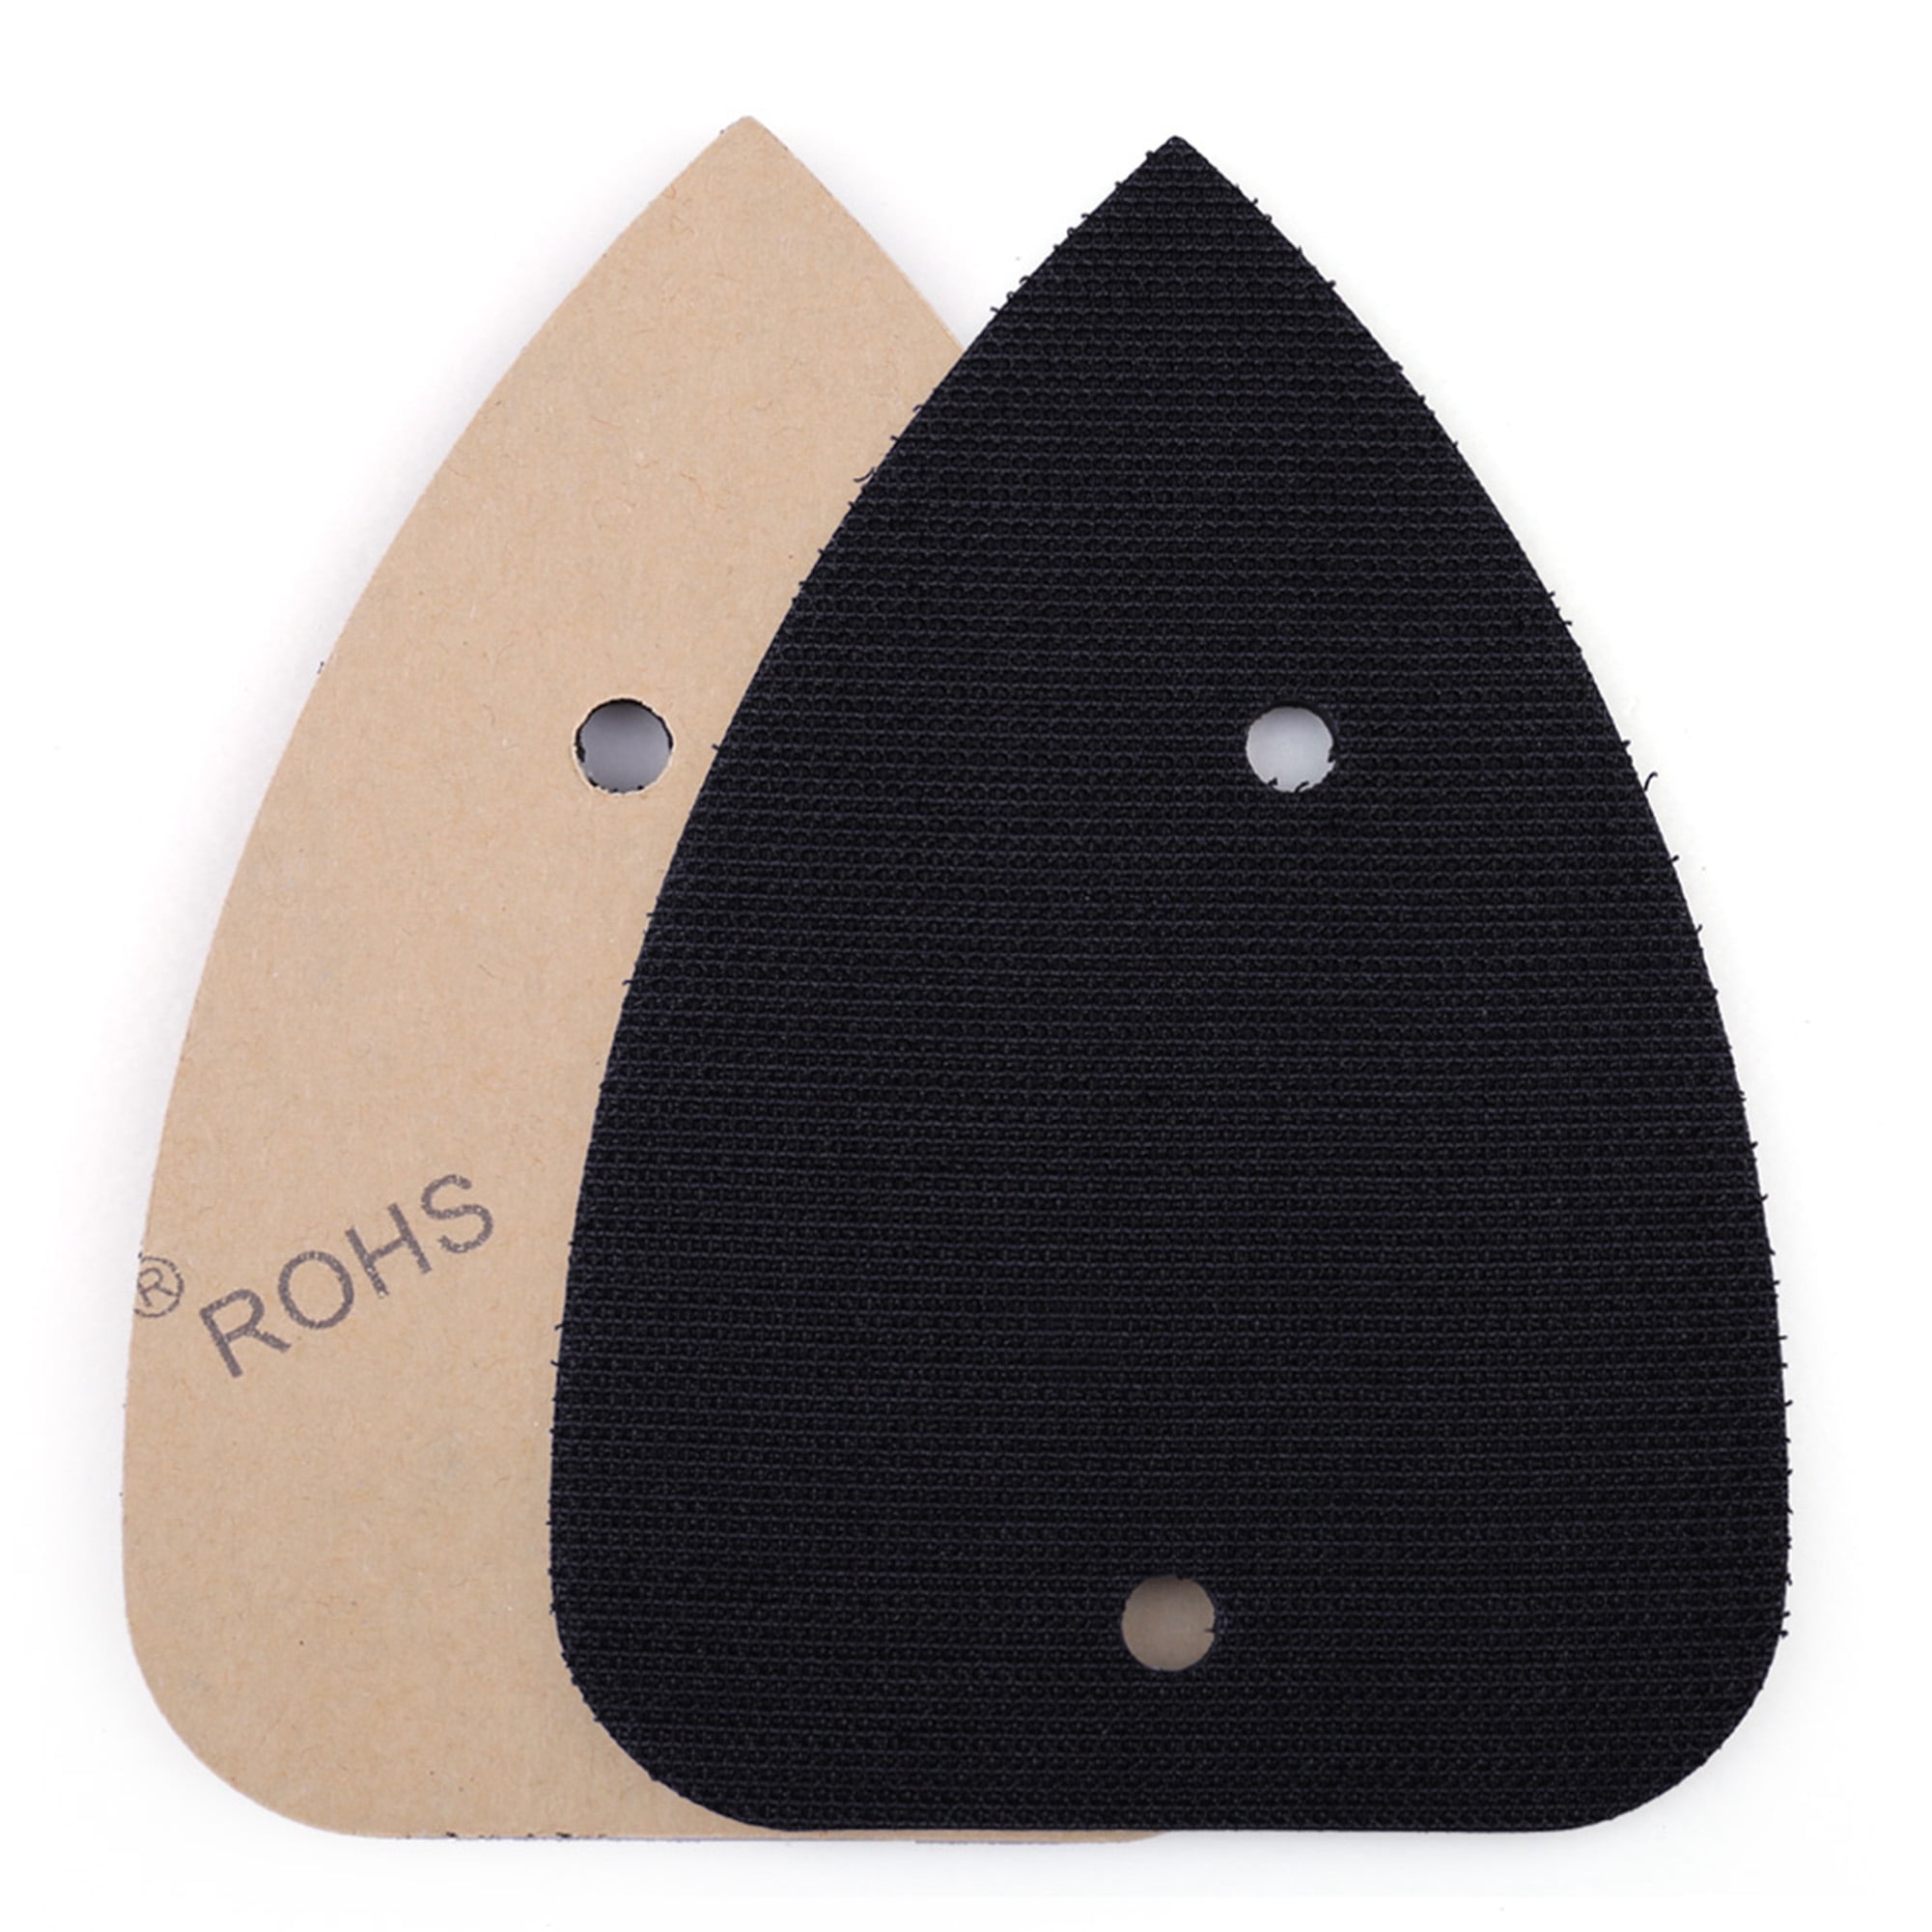 S&F Stead & Fast Black and Decker Sander Replacement Pads 220 Grit Sandpaper 50 Pcs, Mouse Sander Pads, Detail Sander Sandpap